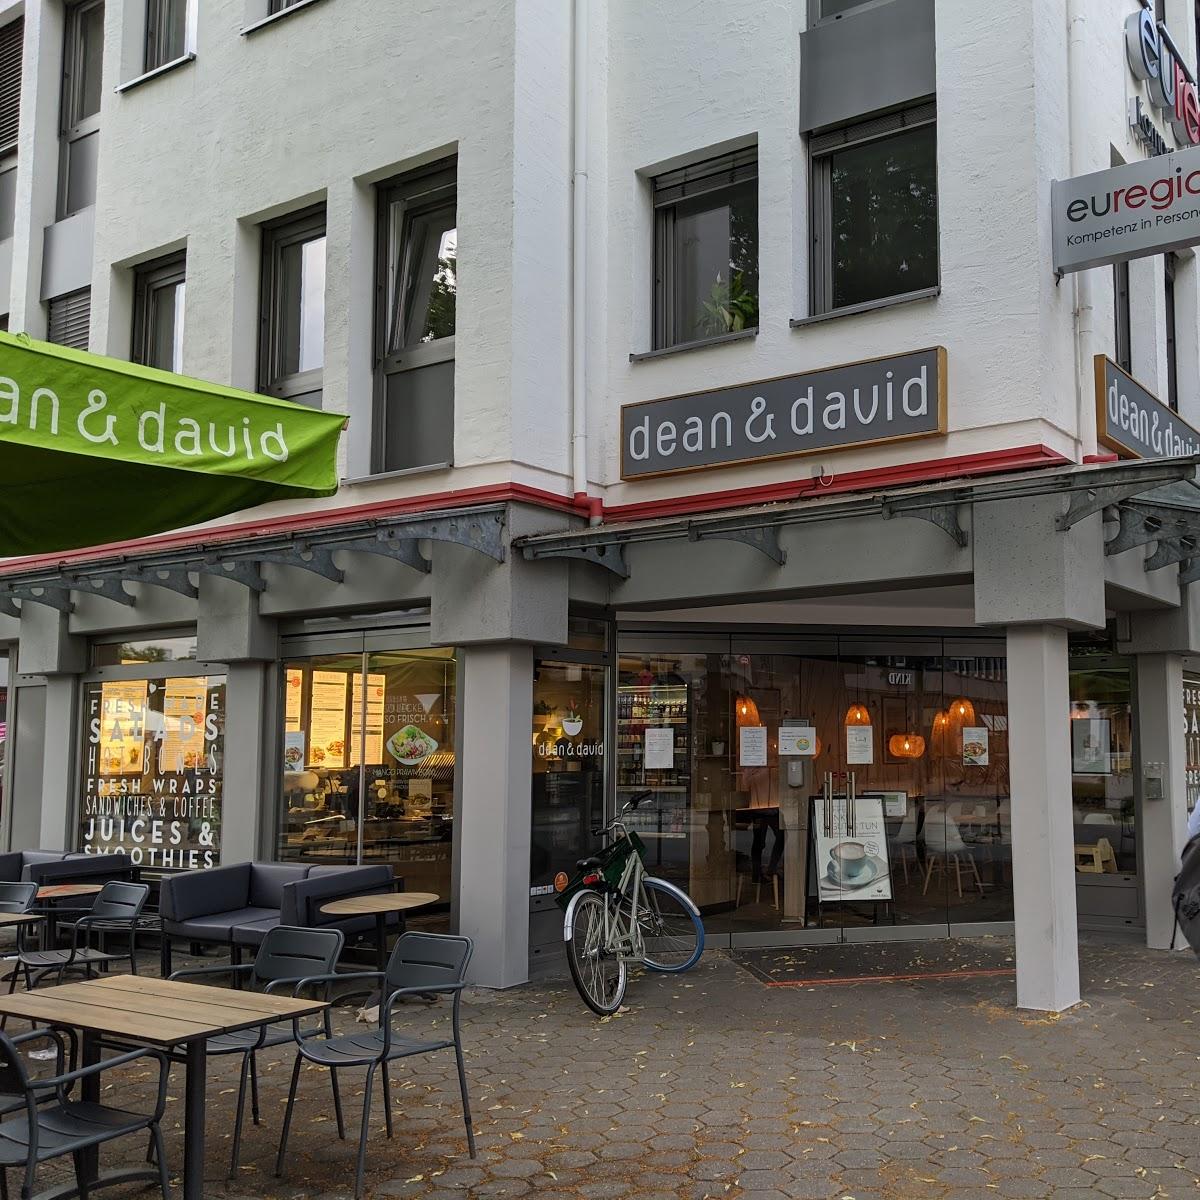 Restaurant "dean&david Osnabrück" in Osnabrück